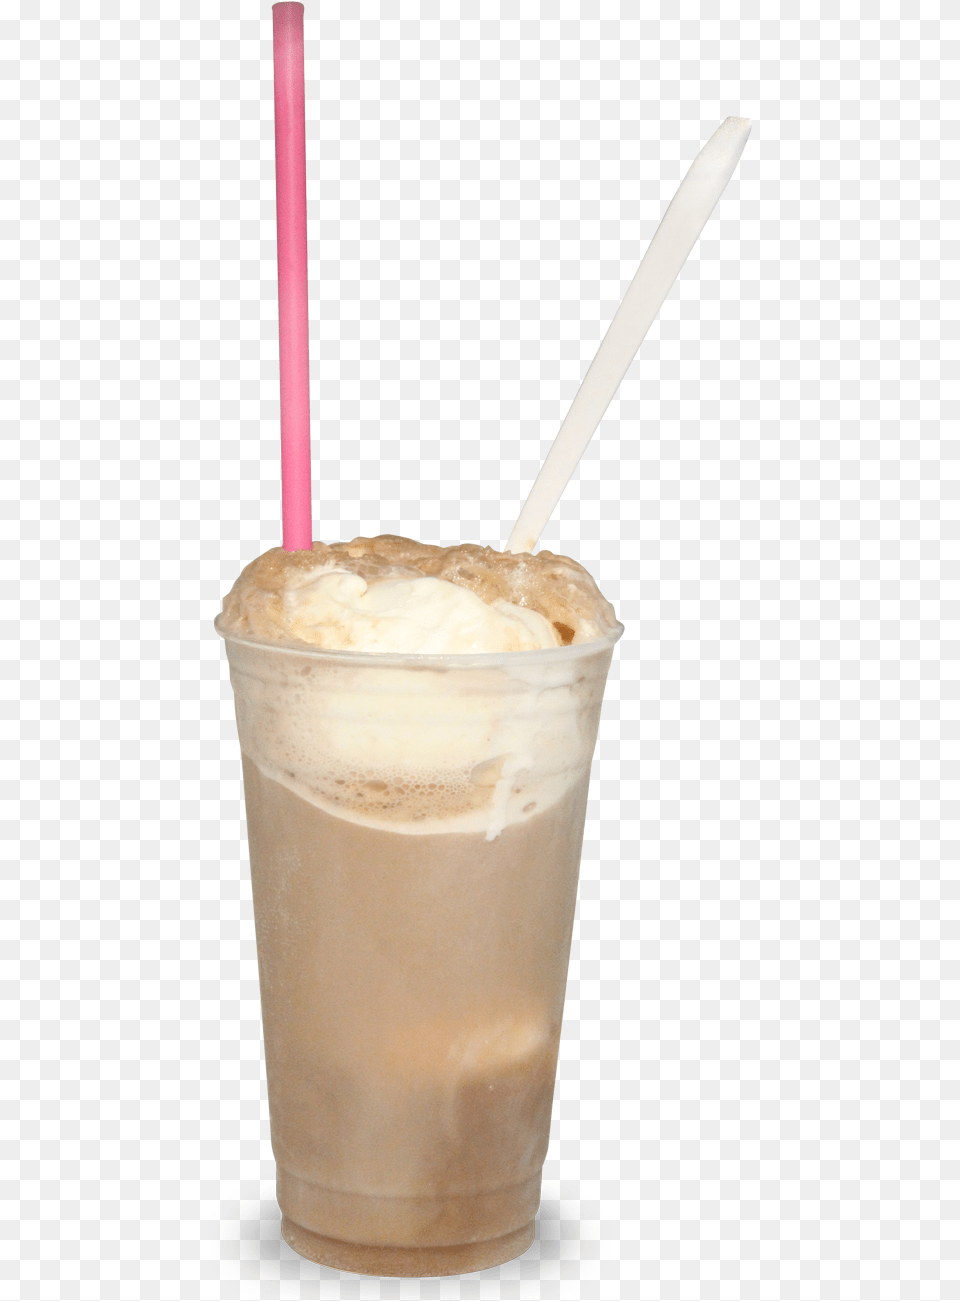 Horchata Download Frapp Coffee, Beverage, Milk, Juice, Cup Png Image